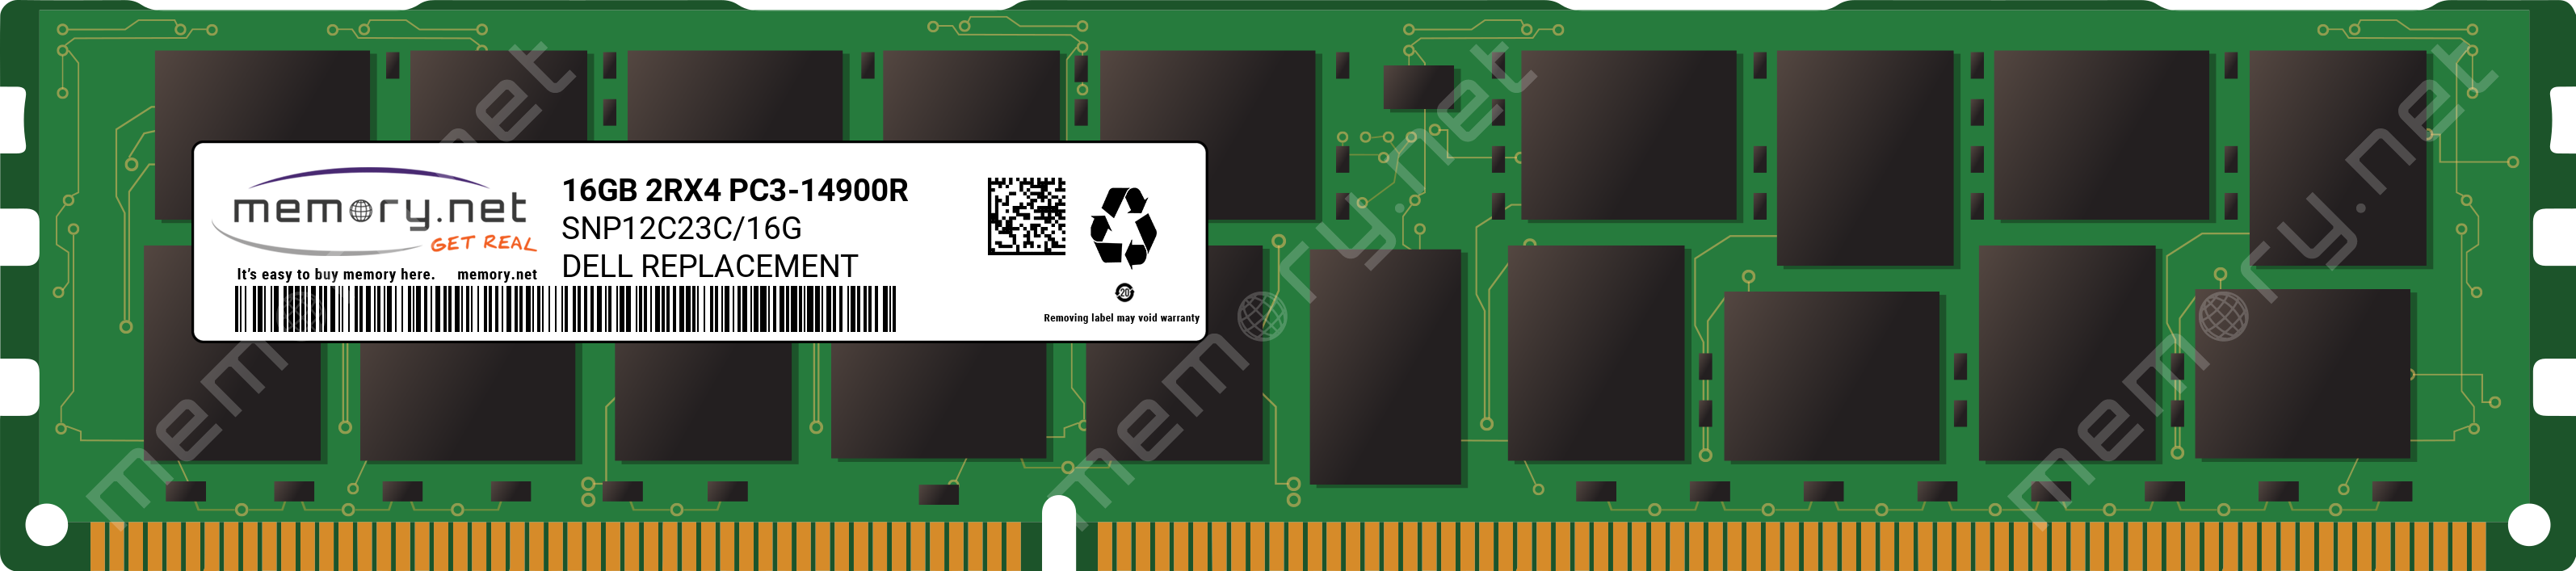 1x16GB PC3-14900 ECC Registered RDIMM Memory for DELL PowerEdge R620 MemoryMasters Dell Compatible SNP12C23C/16G A7187318 16GB 